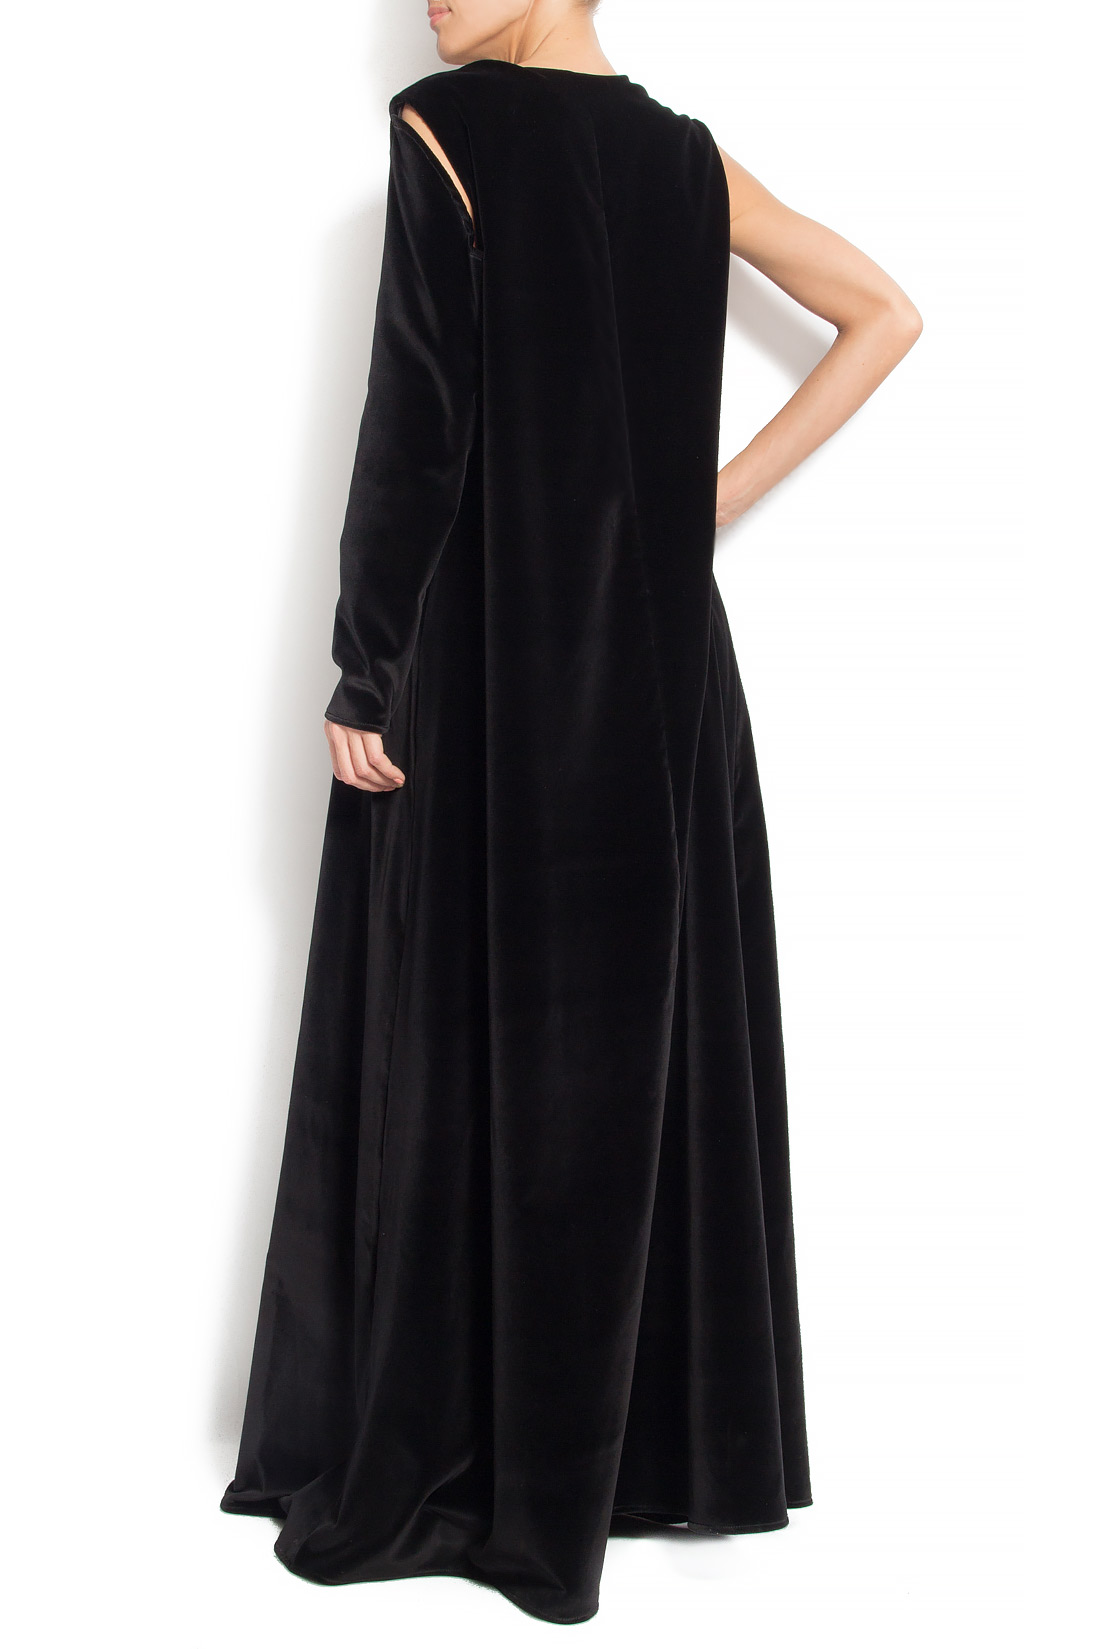 Velvet dress with removable sleeve Aer Wear image 2